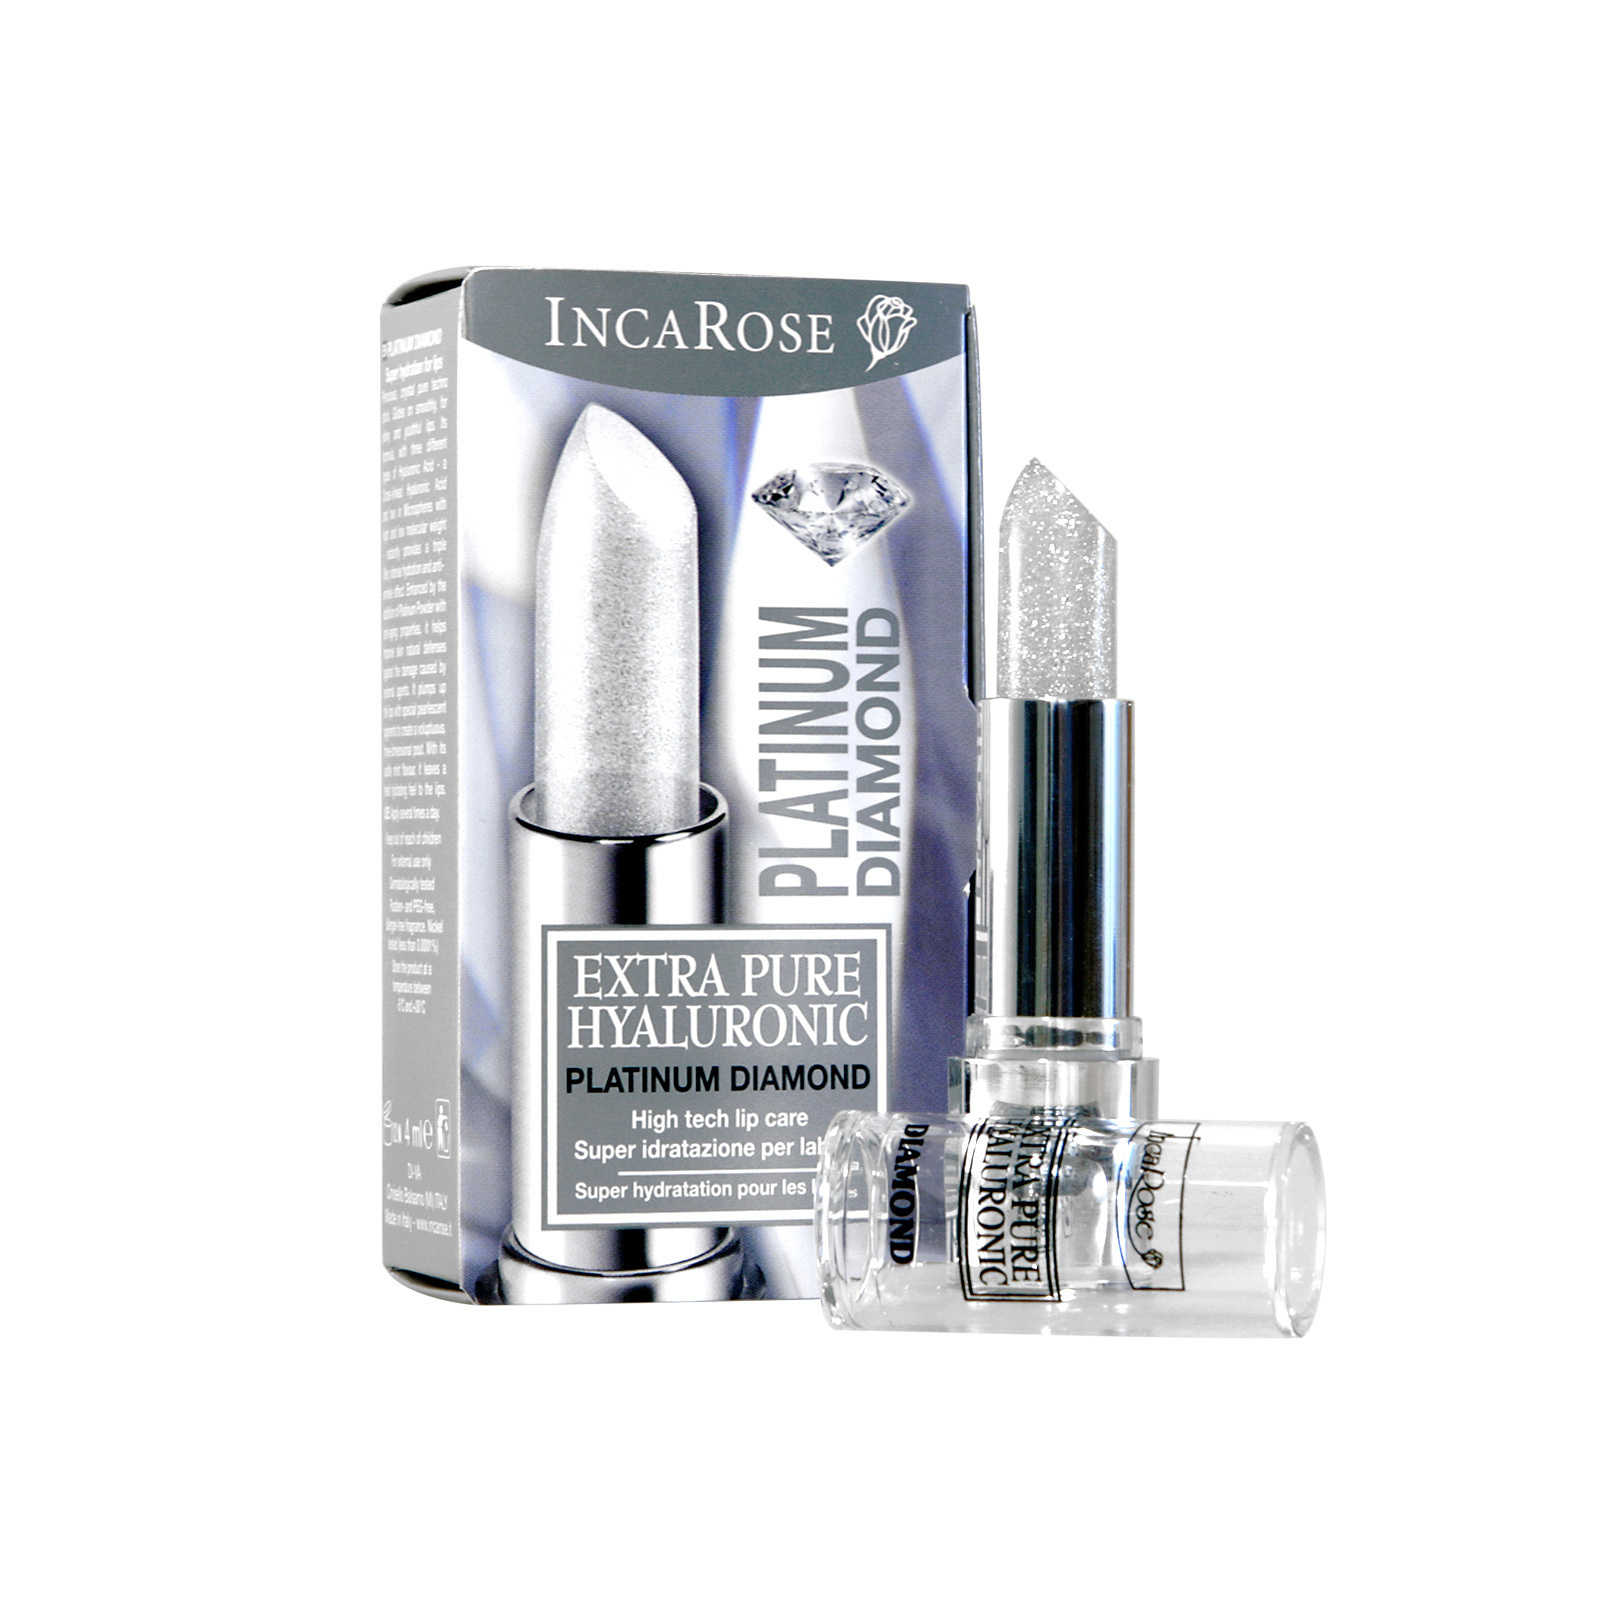 Incarose - Extra Pure Hyaluronic - Platinum Diamond